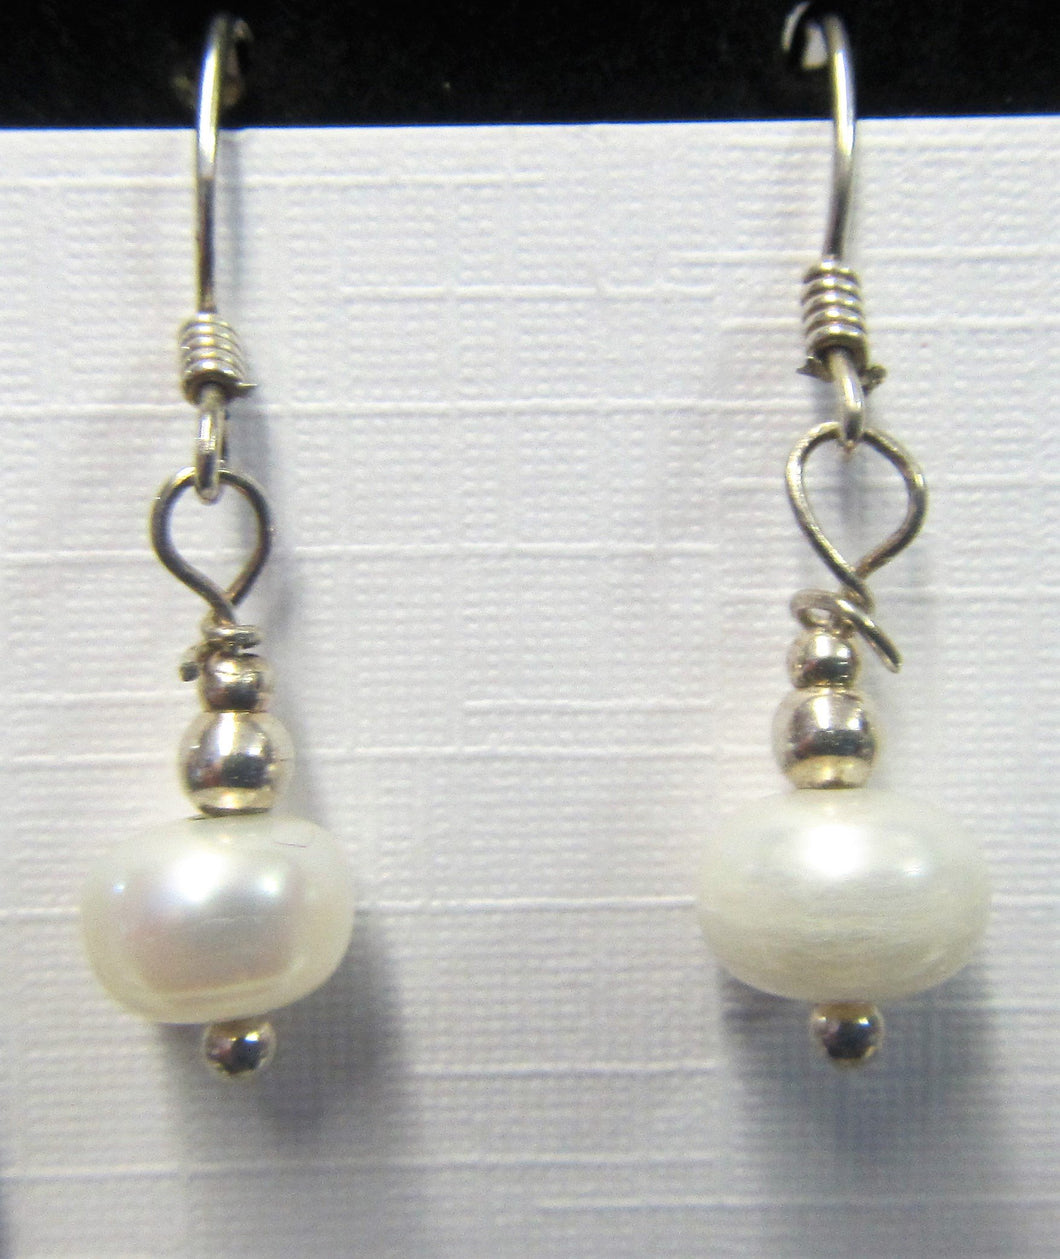 Handcrafted sterling silver pearl earrings on Sterling silver hooks